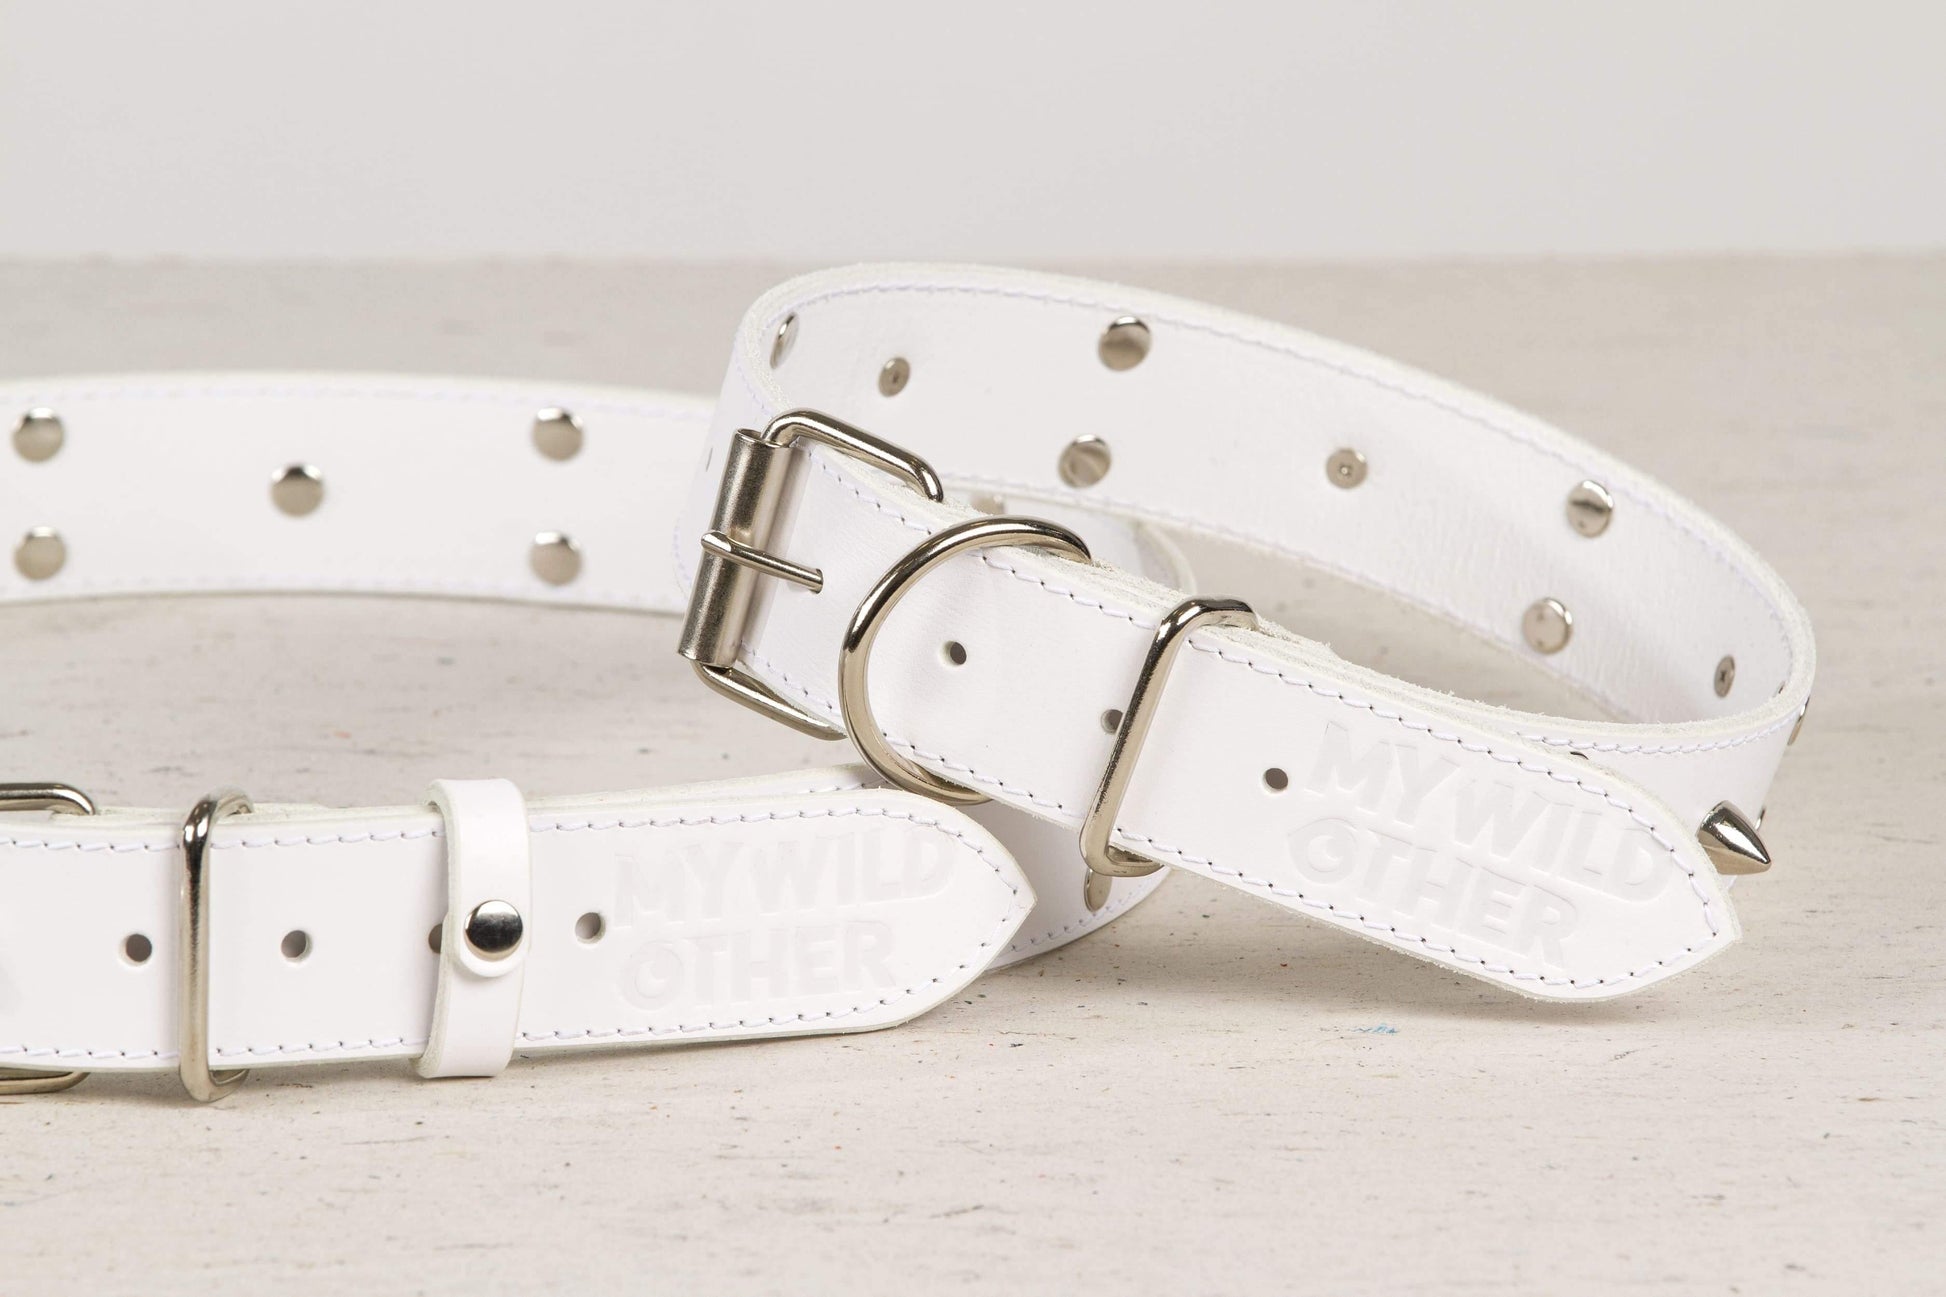 Handmade white leather STUDDED dog collar - premium dog goods handmade in Europe by animalistus